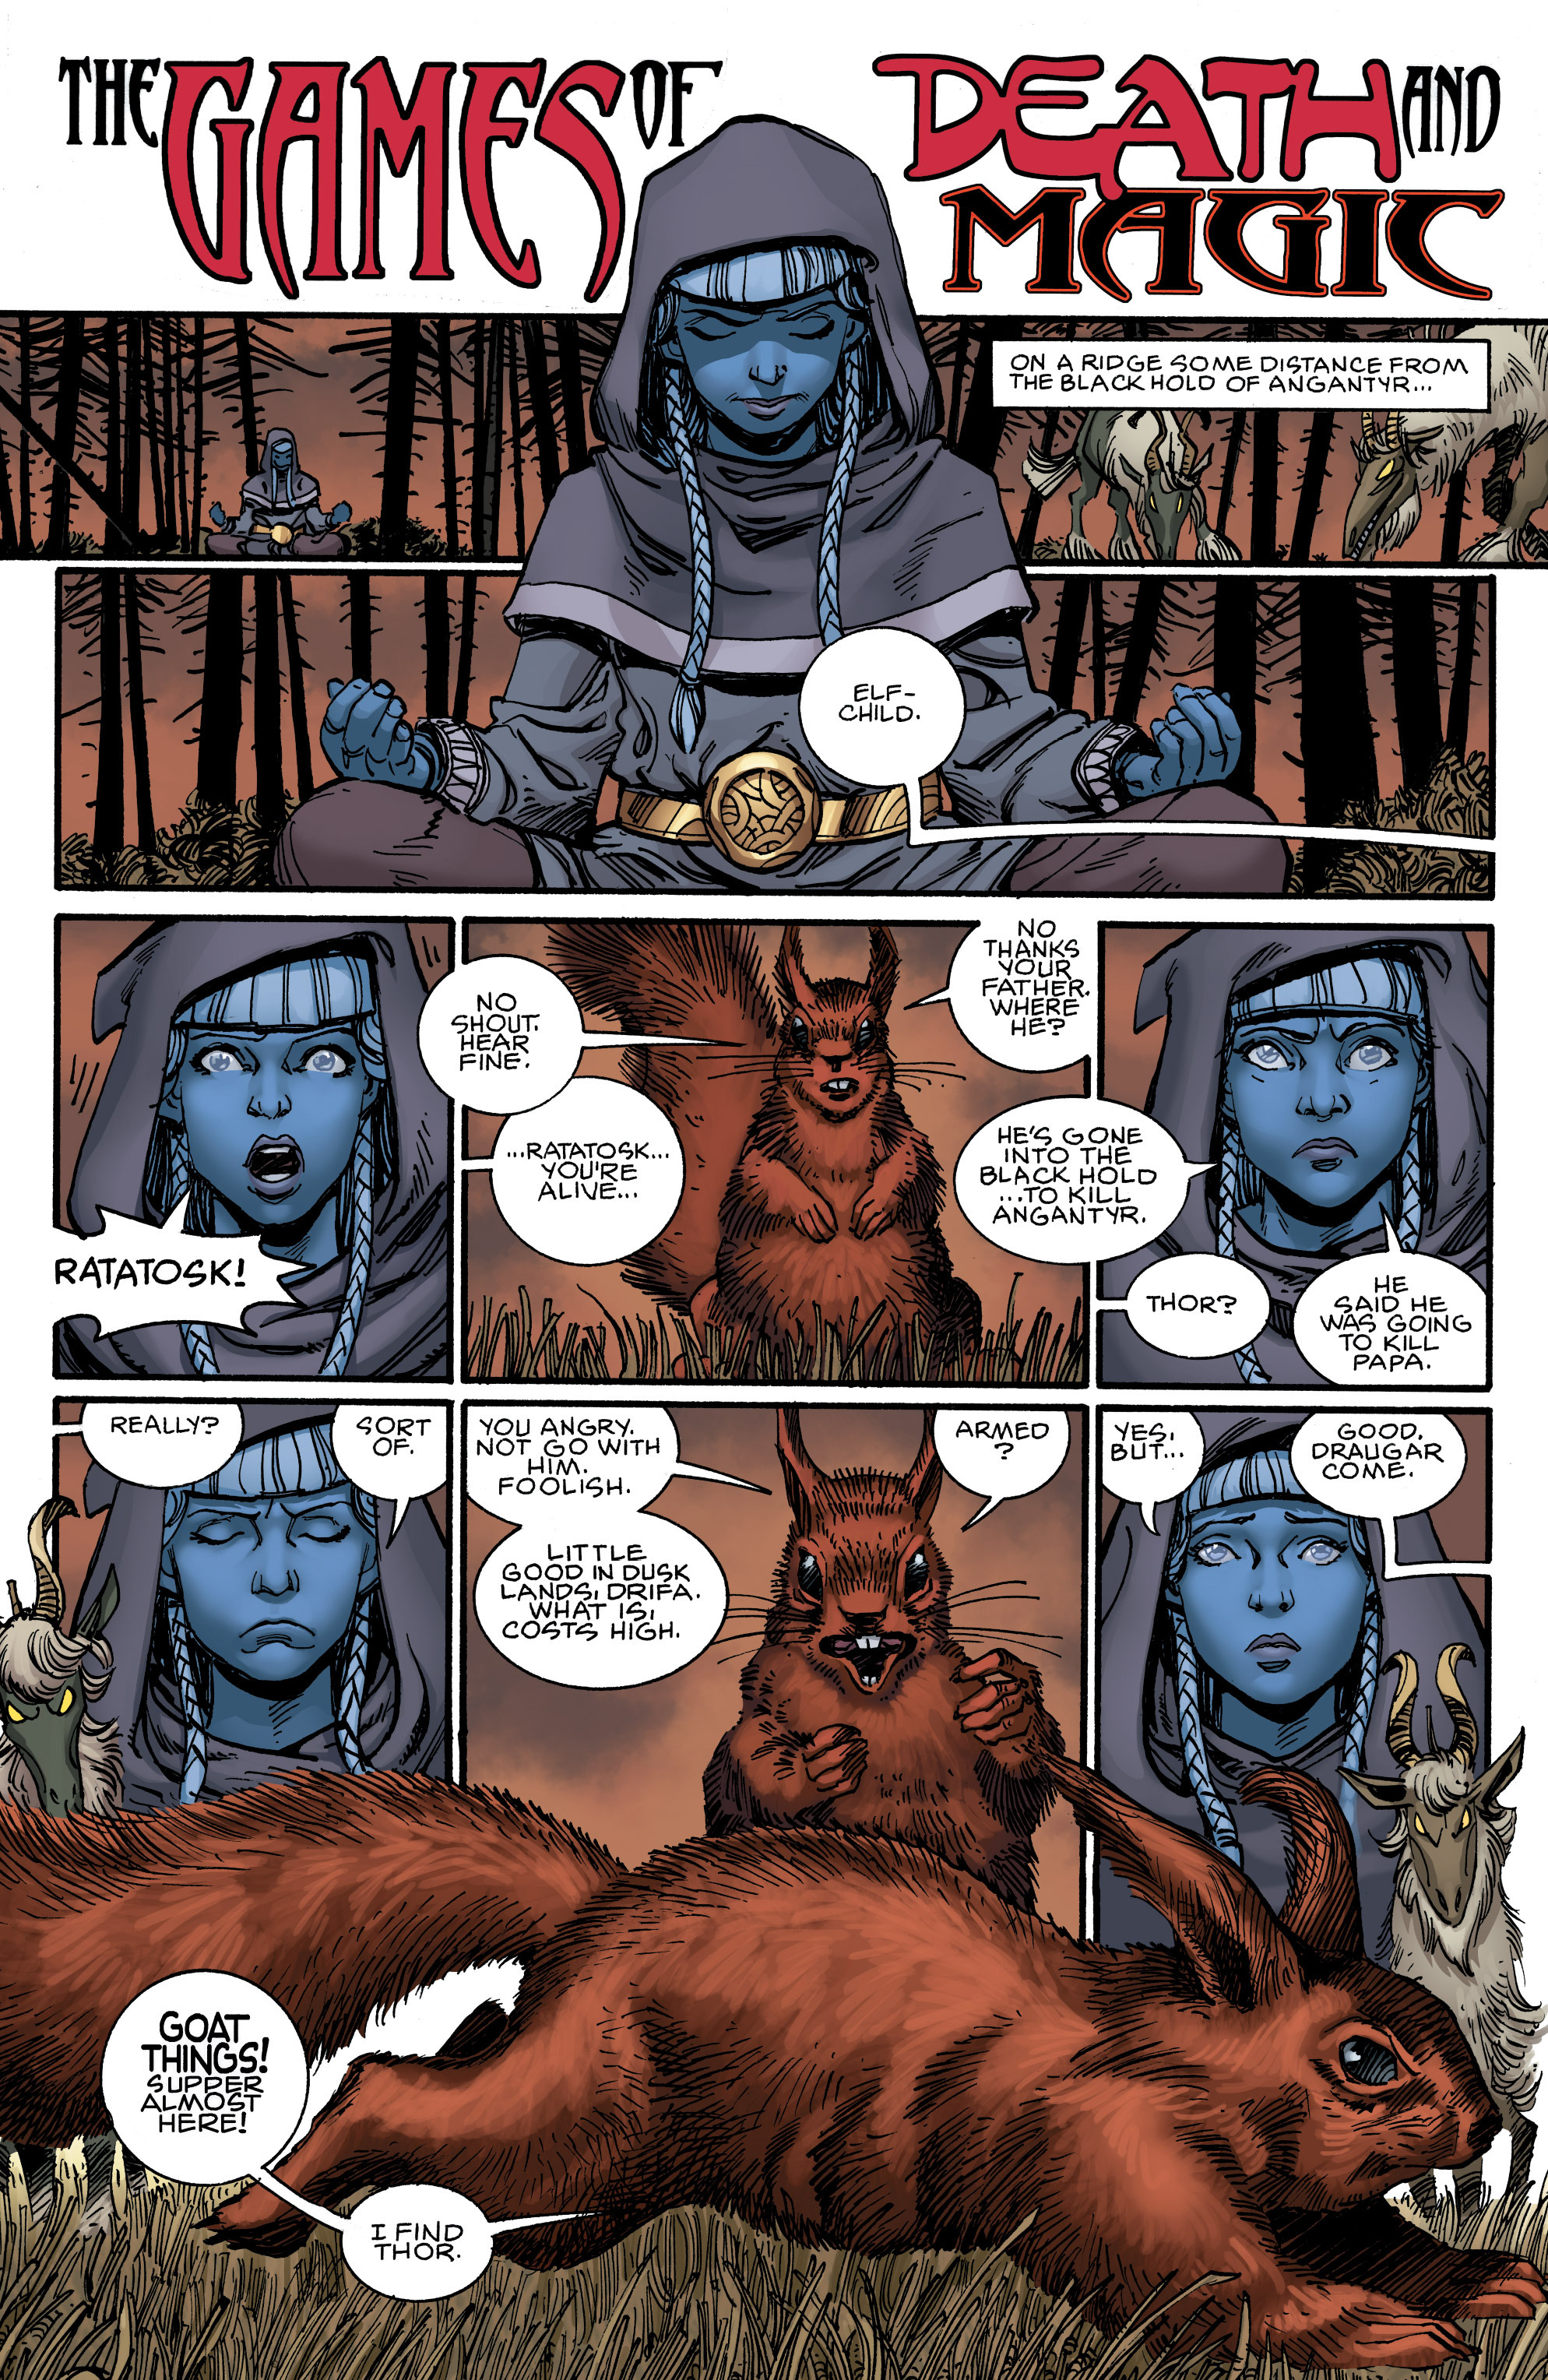 Ragnarok (2014-): Chapter 12 - Page 3